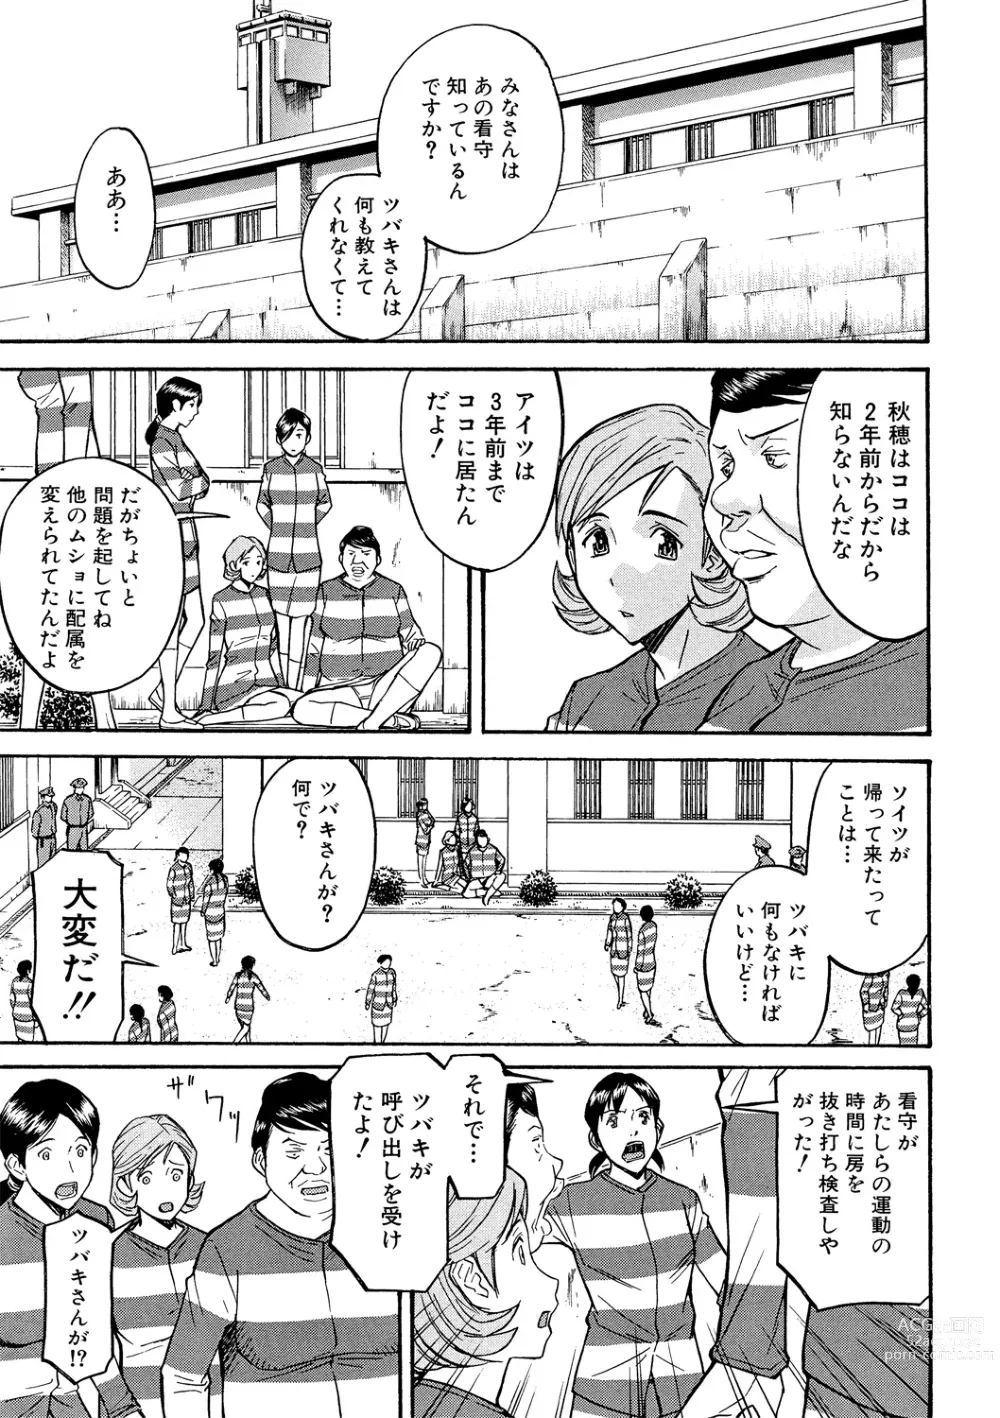 Page 6 of manga Camellia